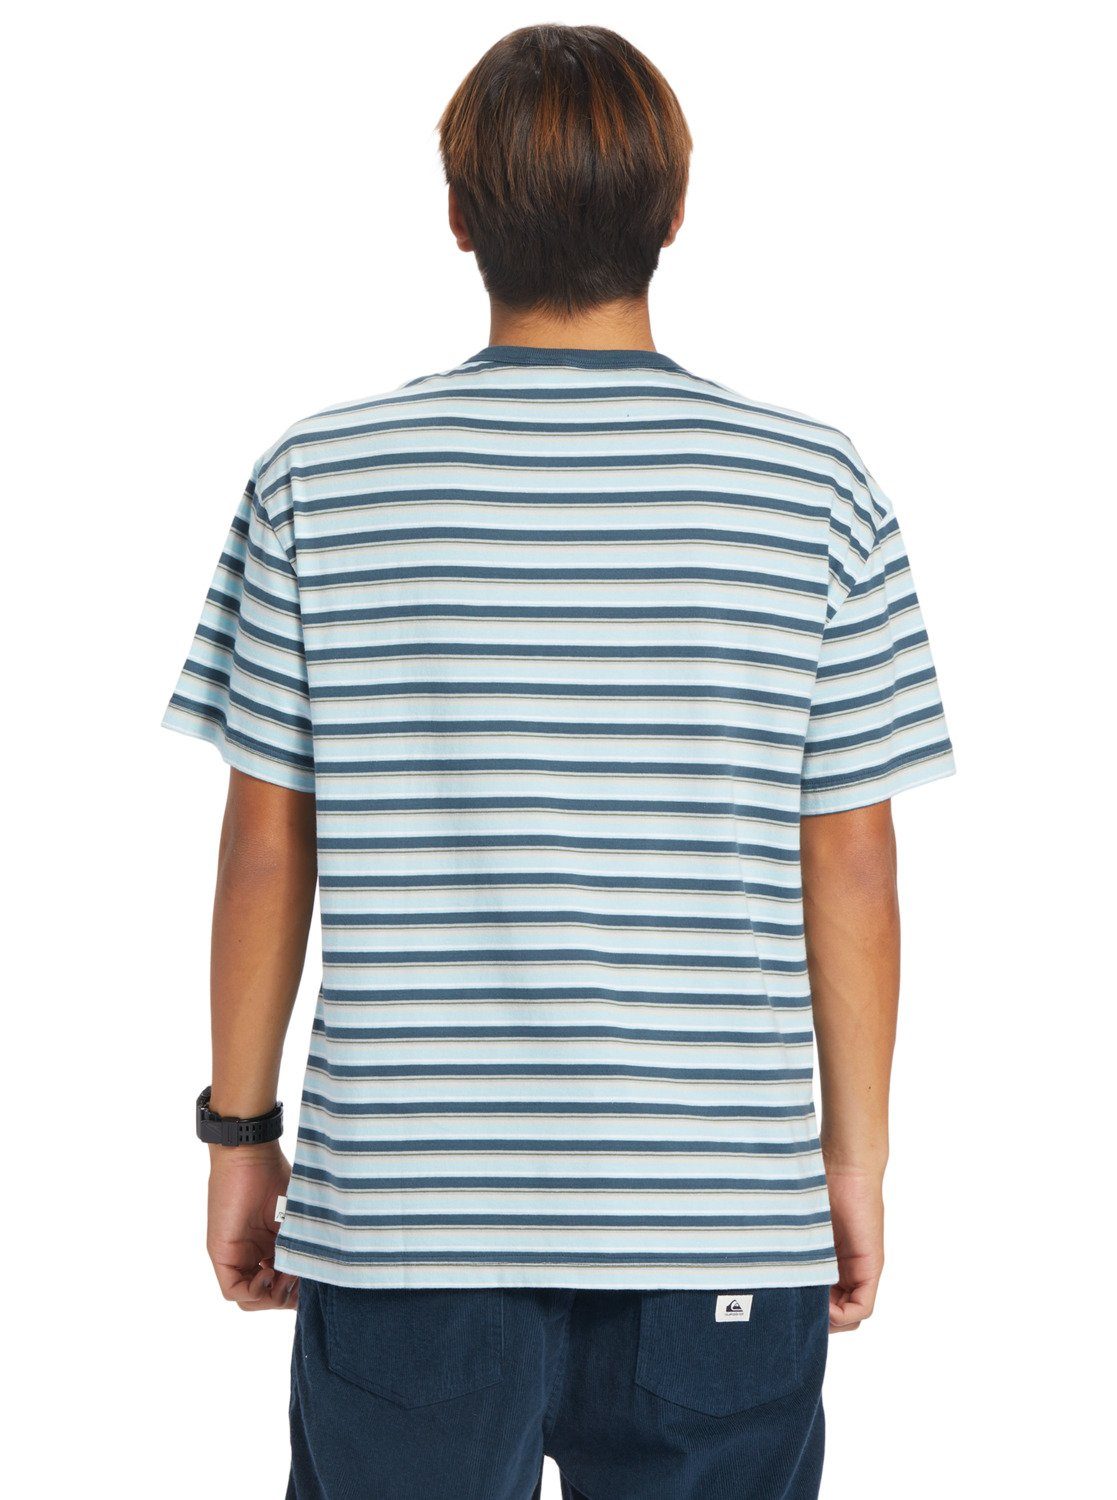 Quiksilver Joey T-Shirt Stripe